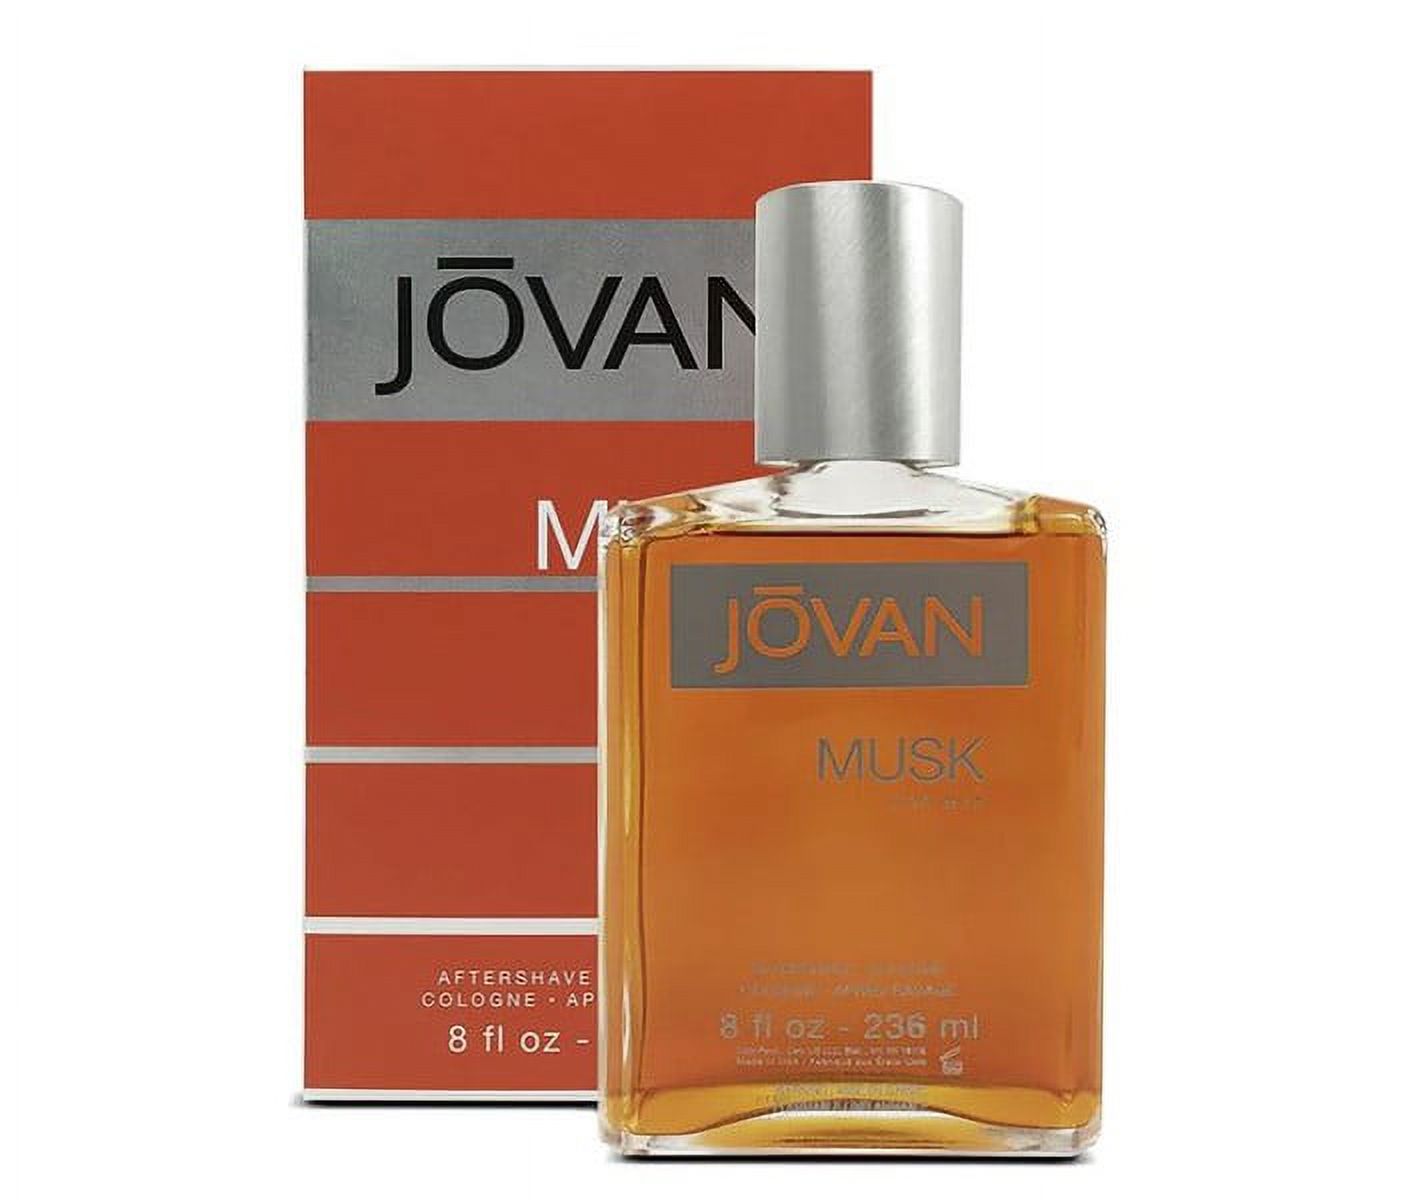 Jovan Musk Cologne for Men, 8 fl oz Full Size - image 2 of 3